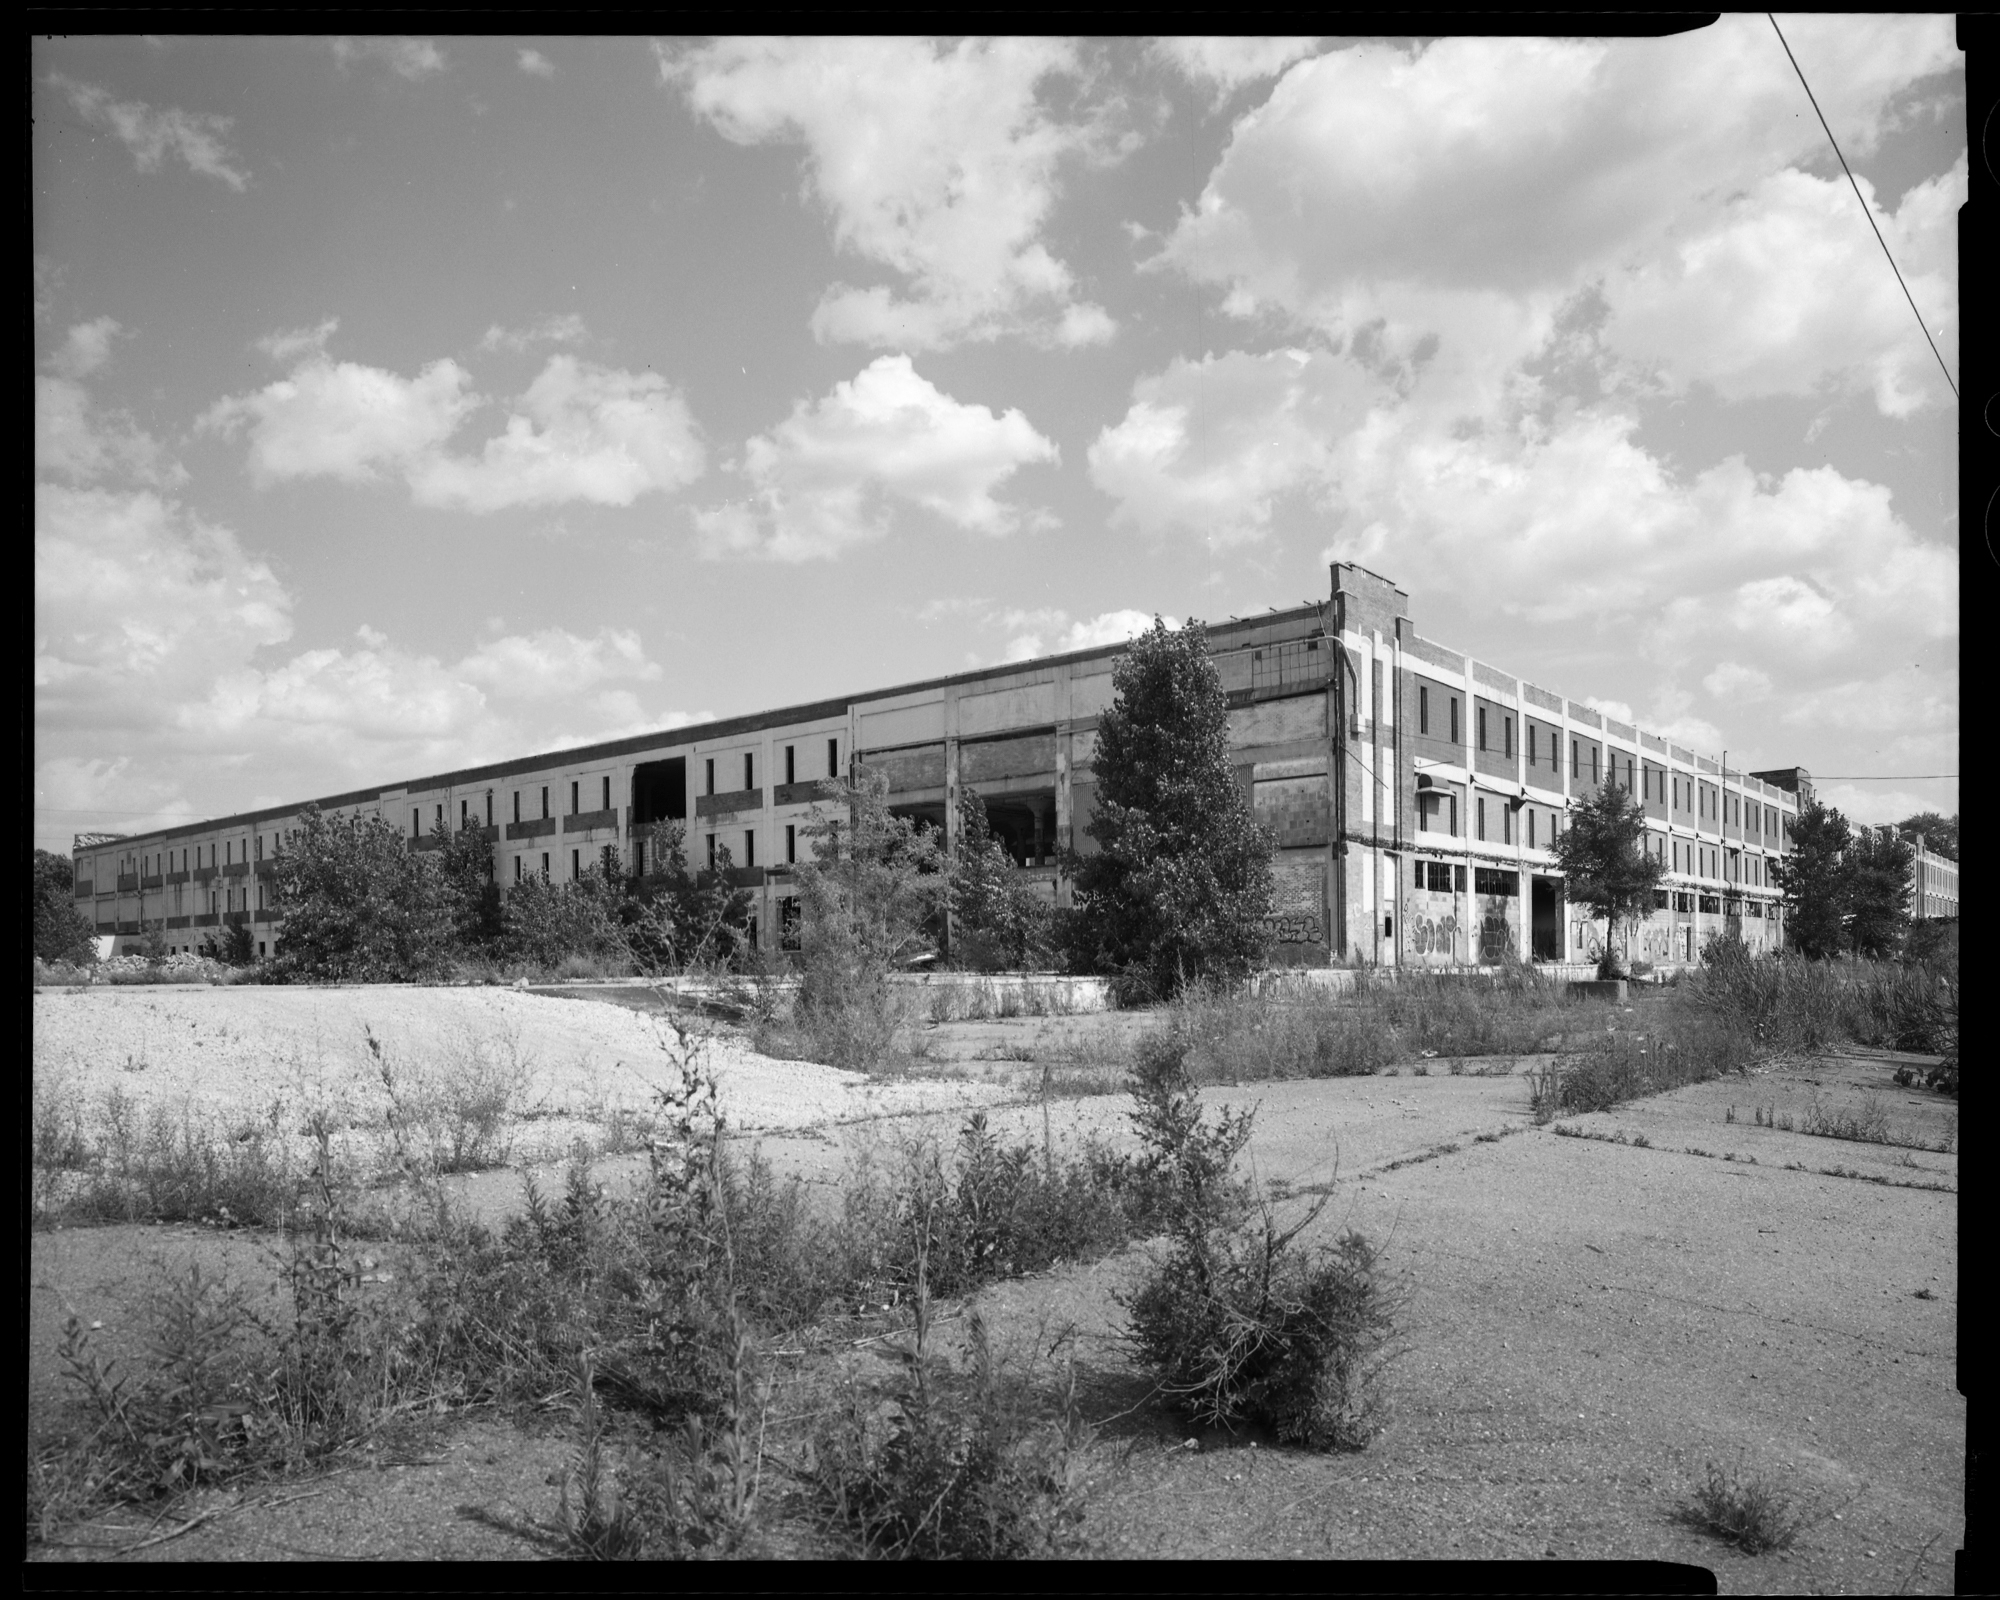 Kelvinator/AMC Headquarters-Detroit